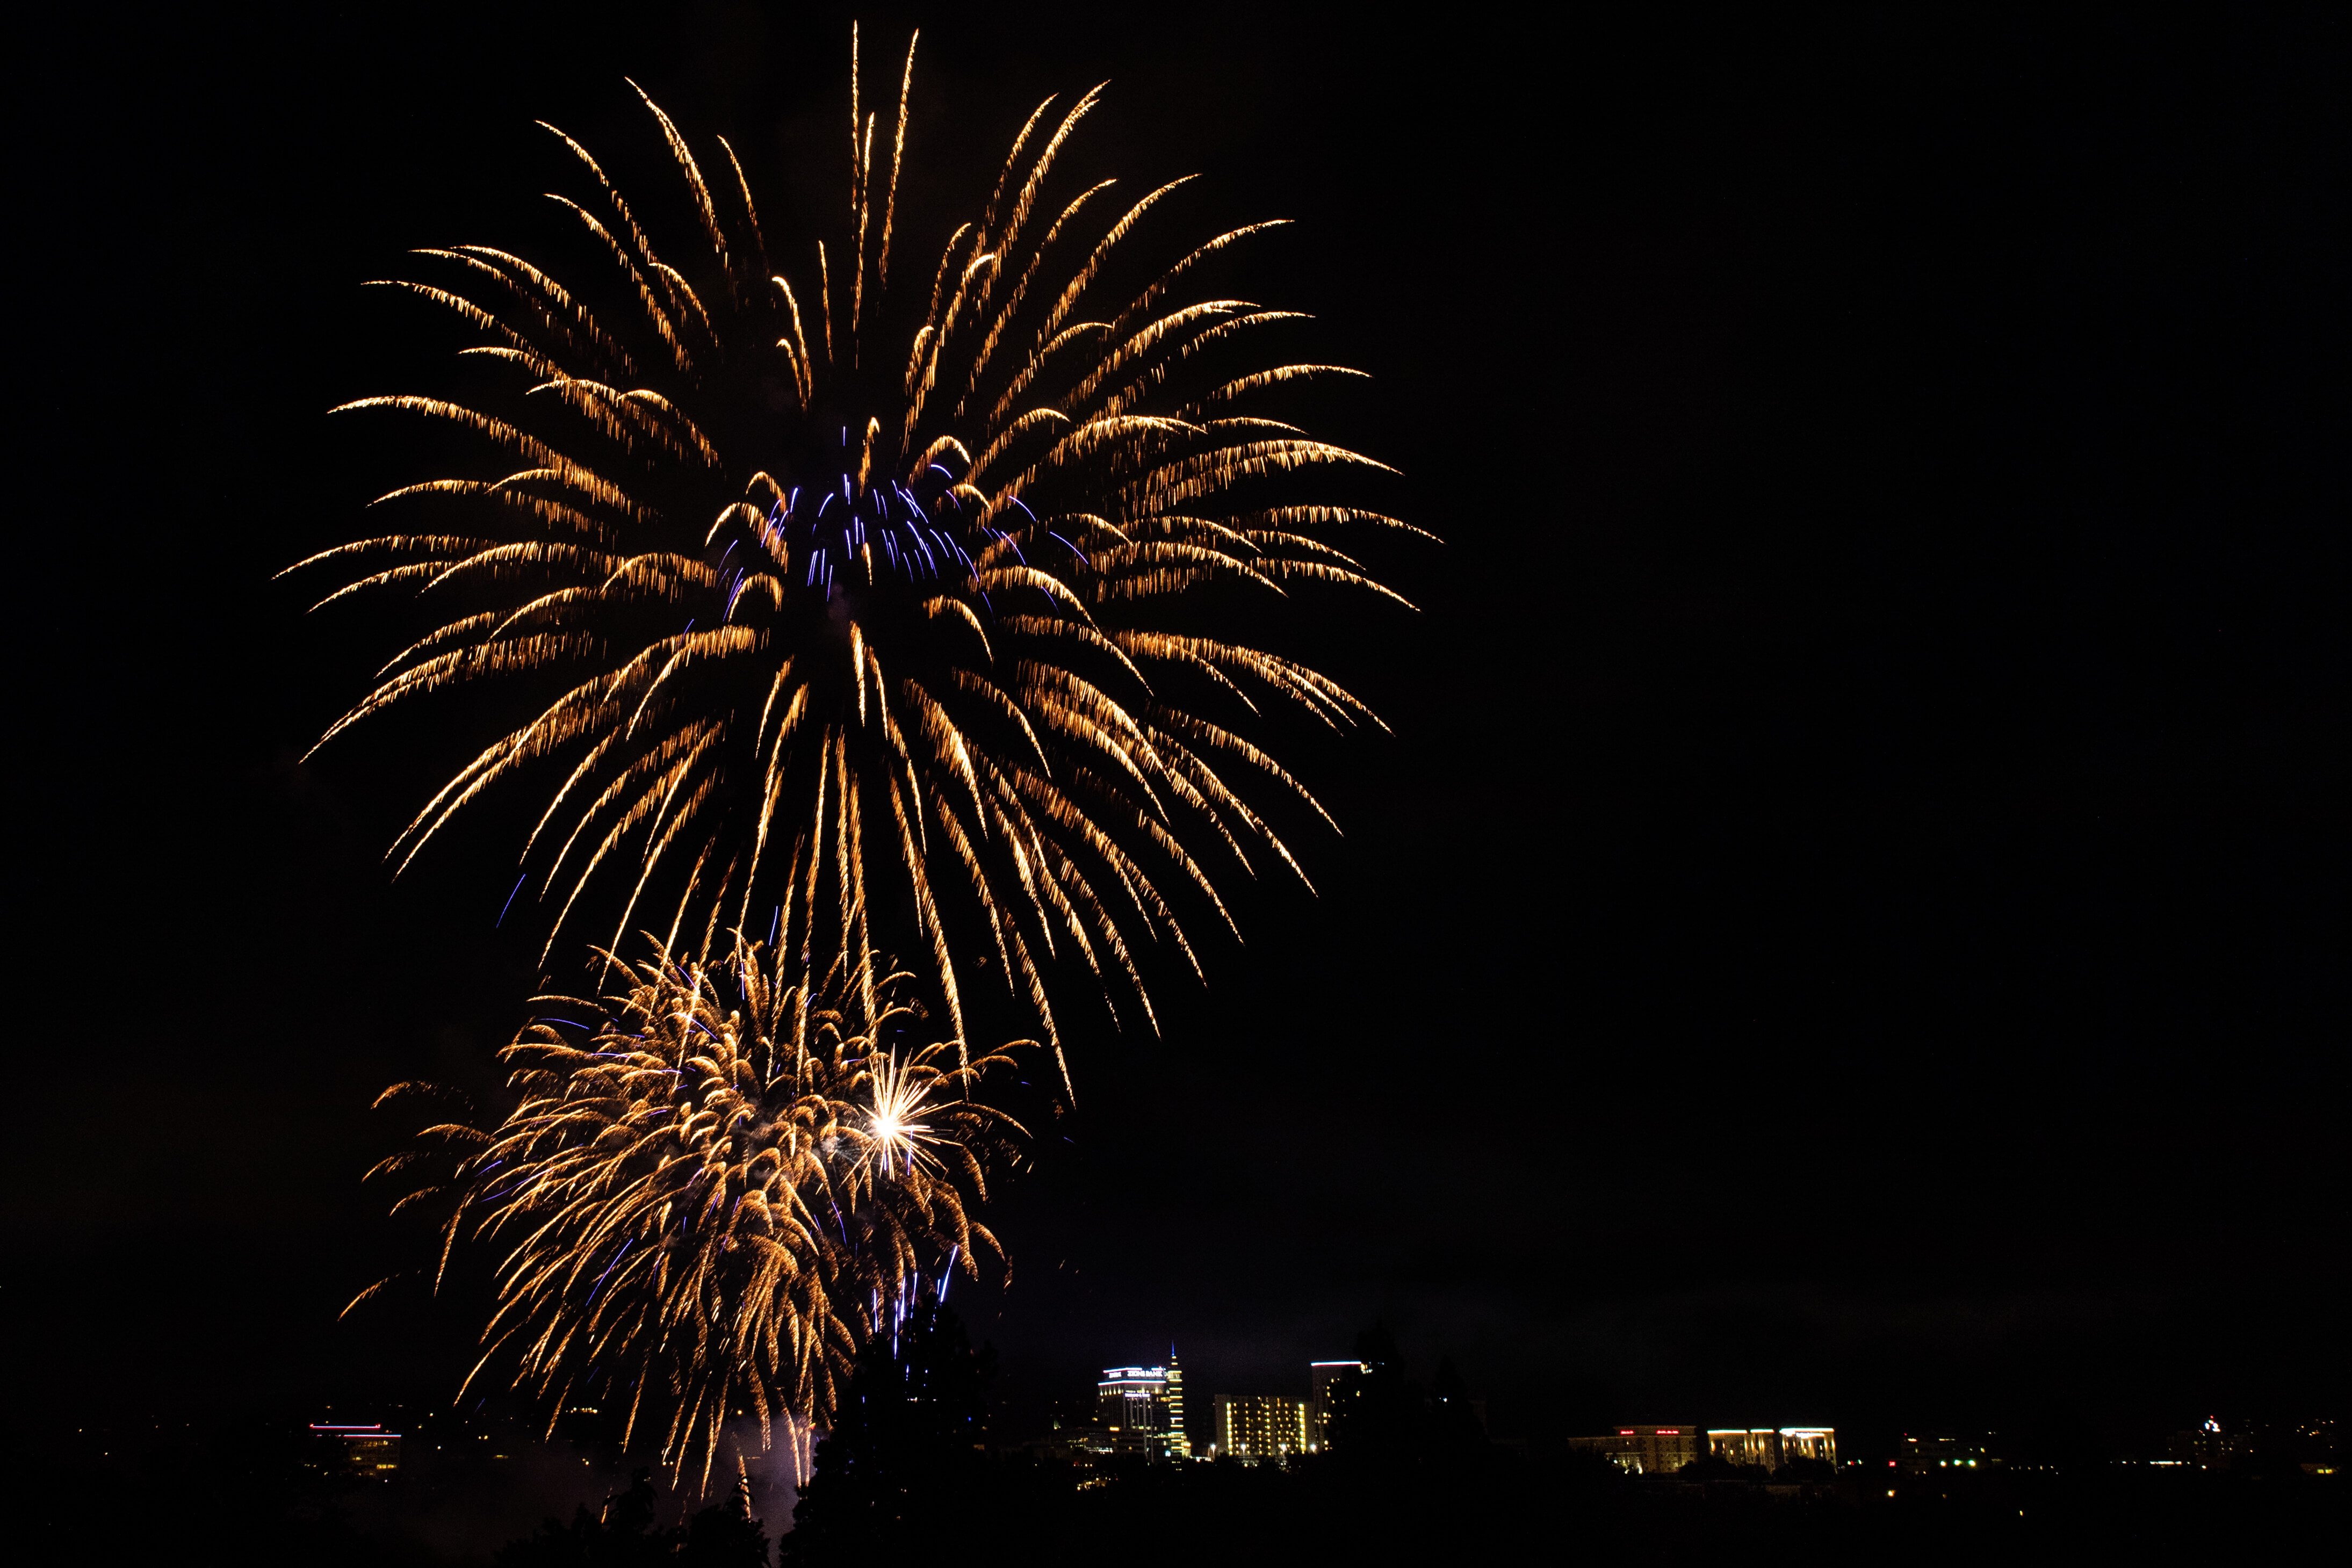 City of Boise Fourth of July Fireworks Celebration Returns To Ann